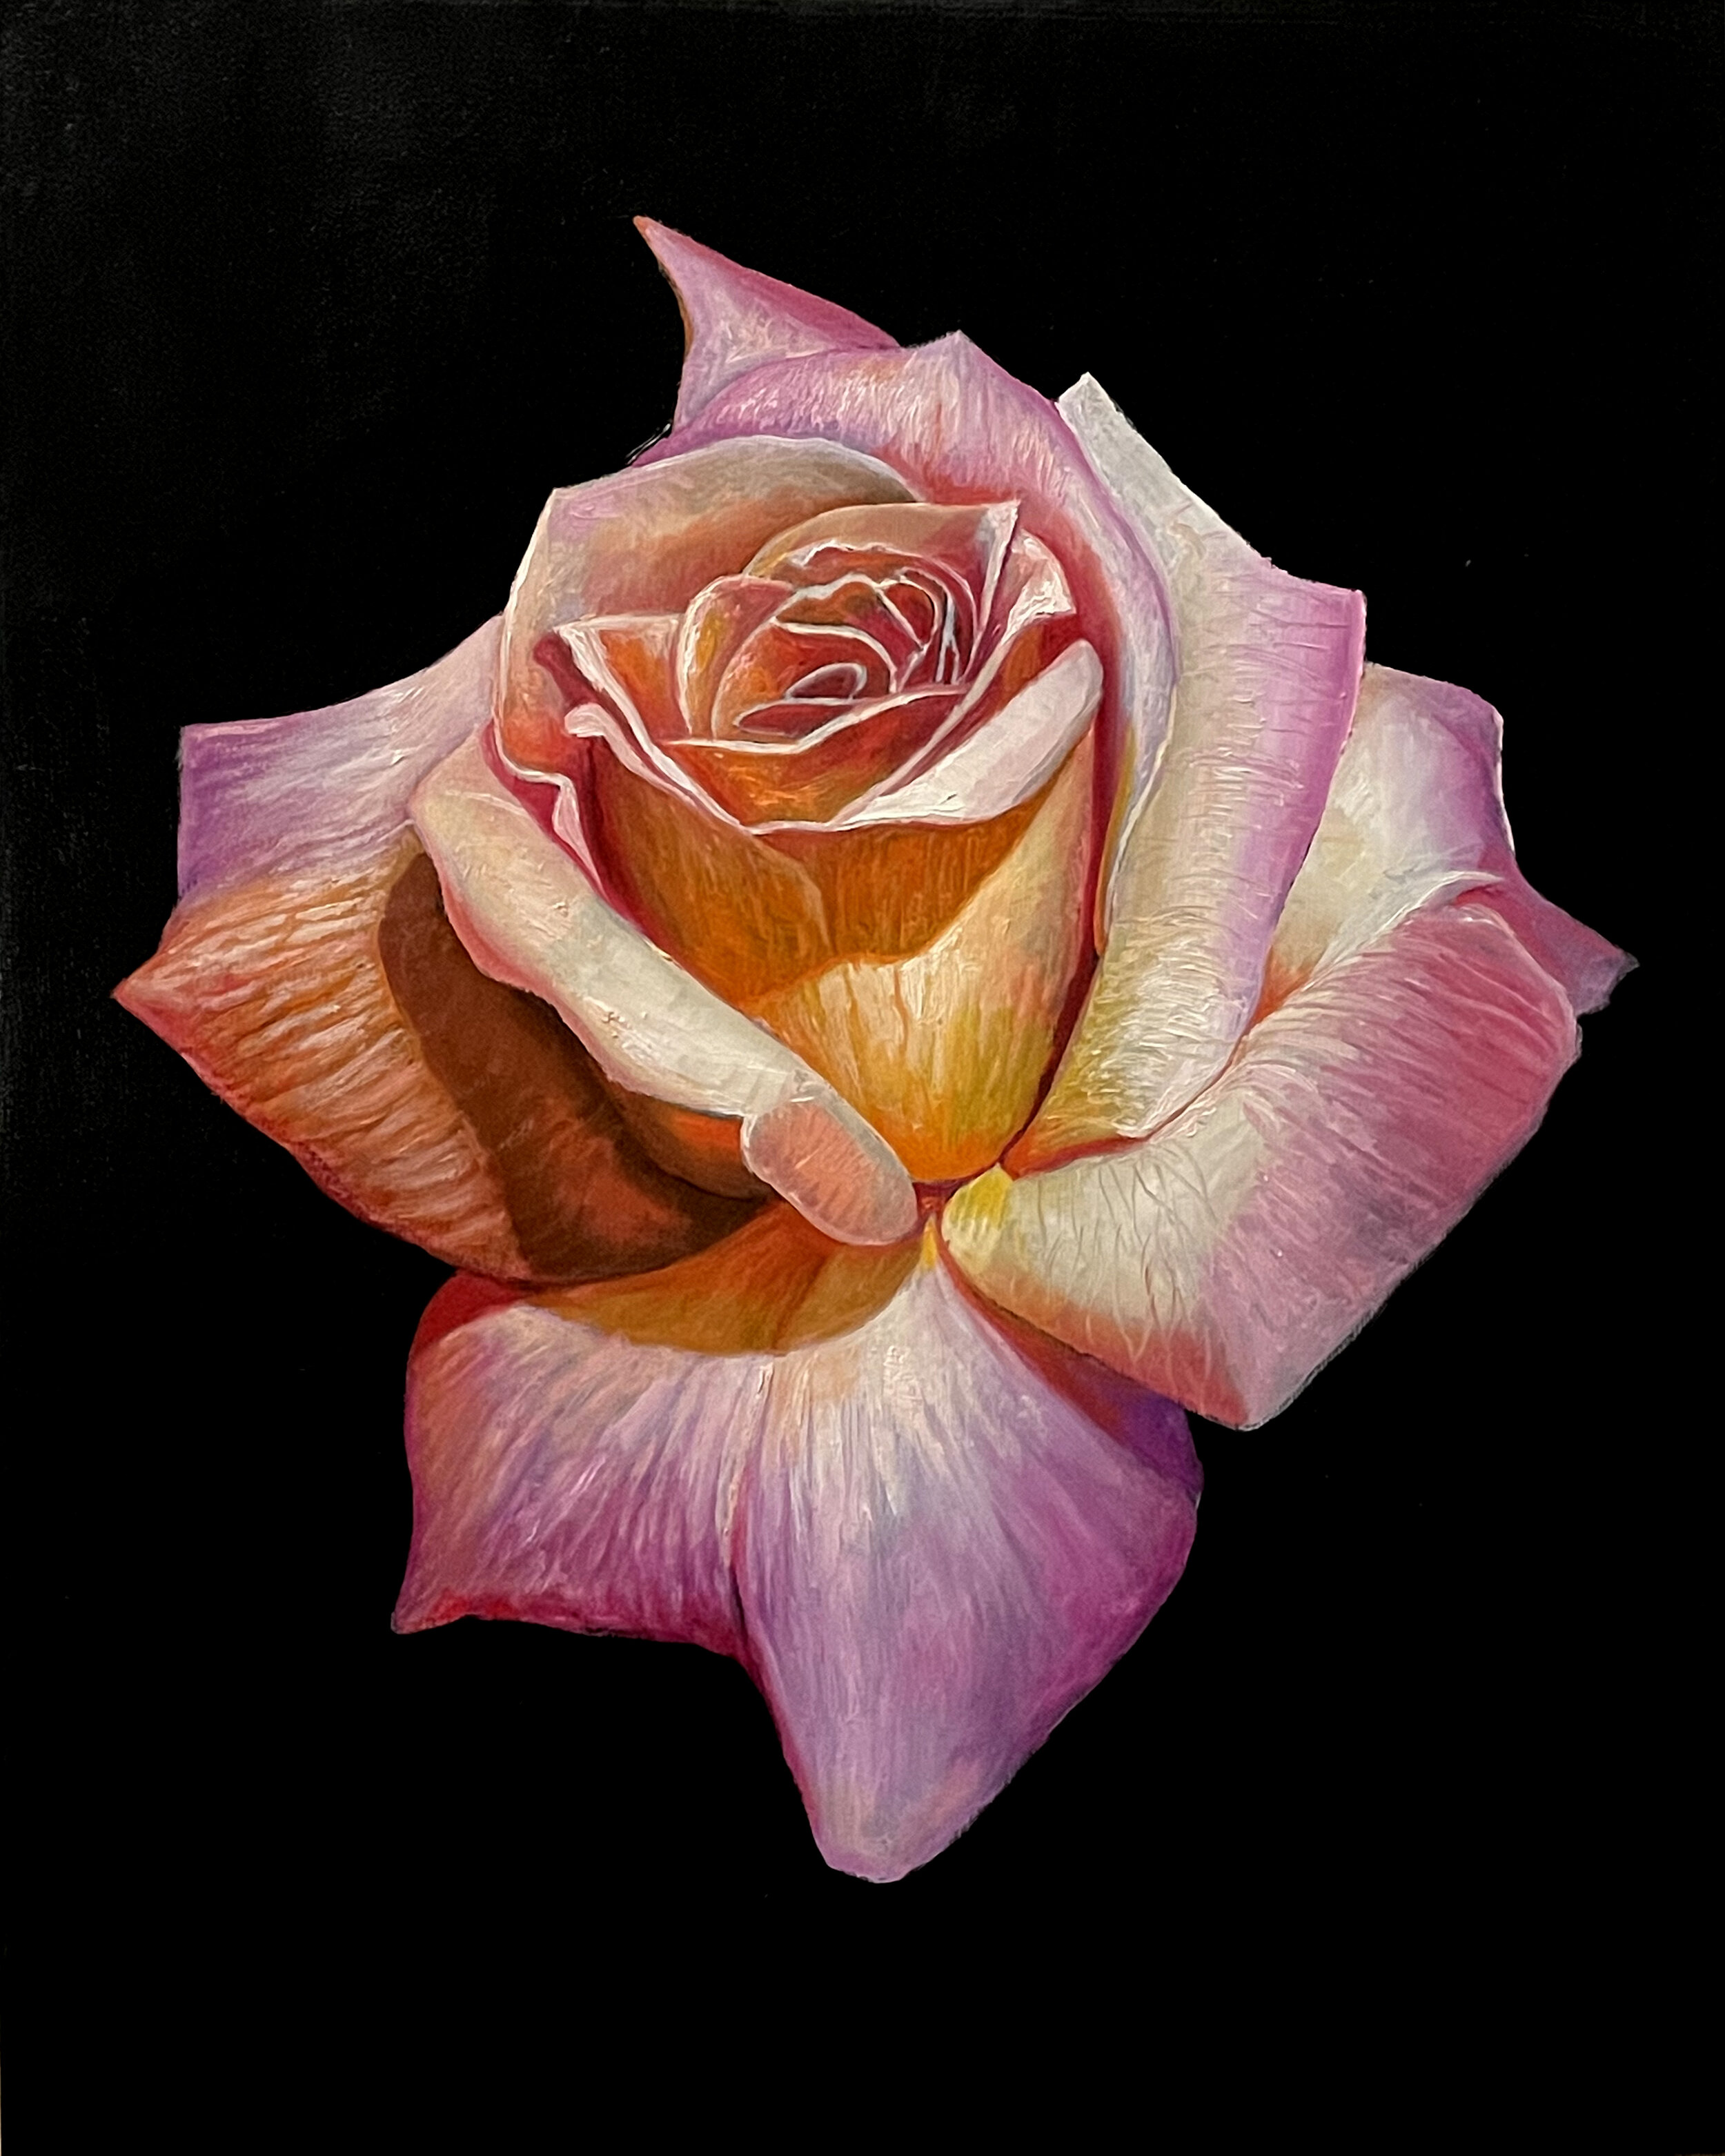 A Peace Rose